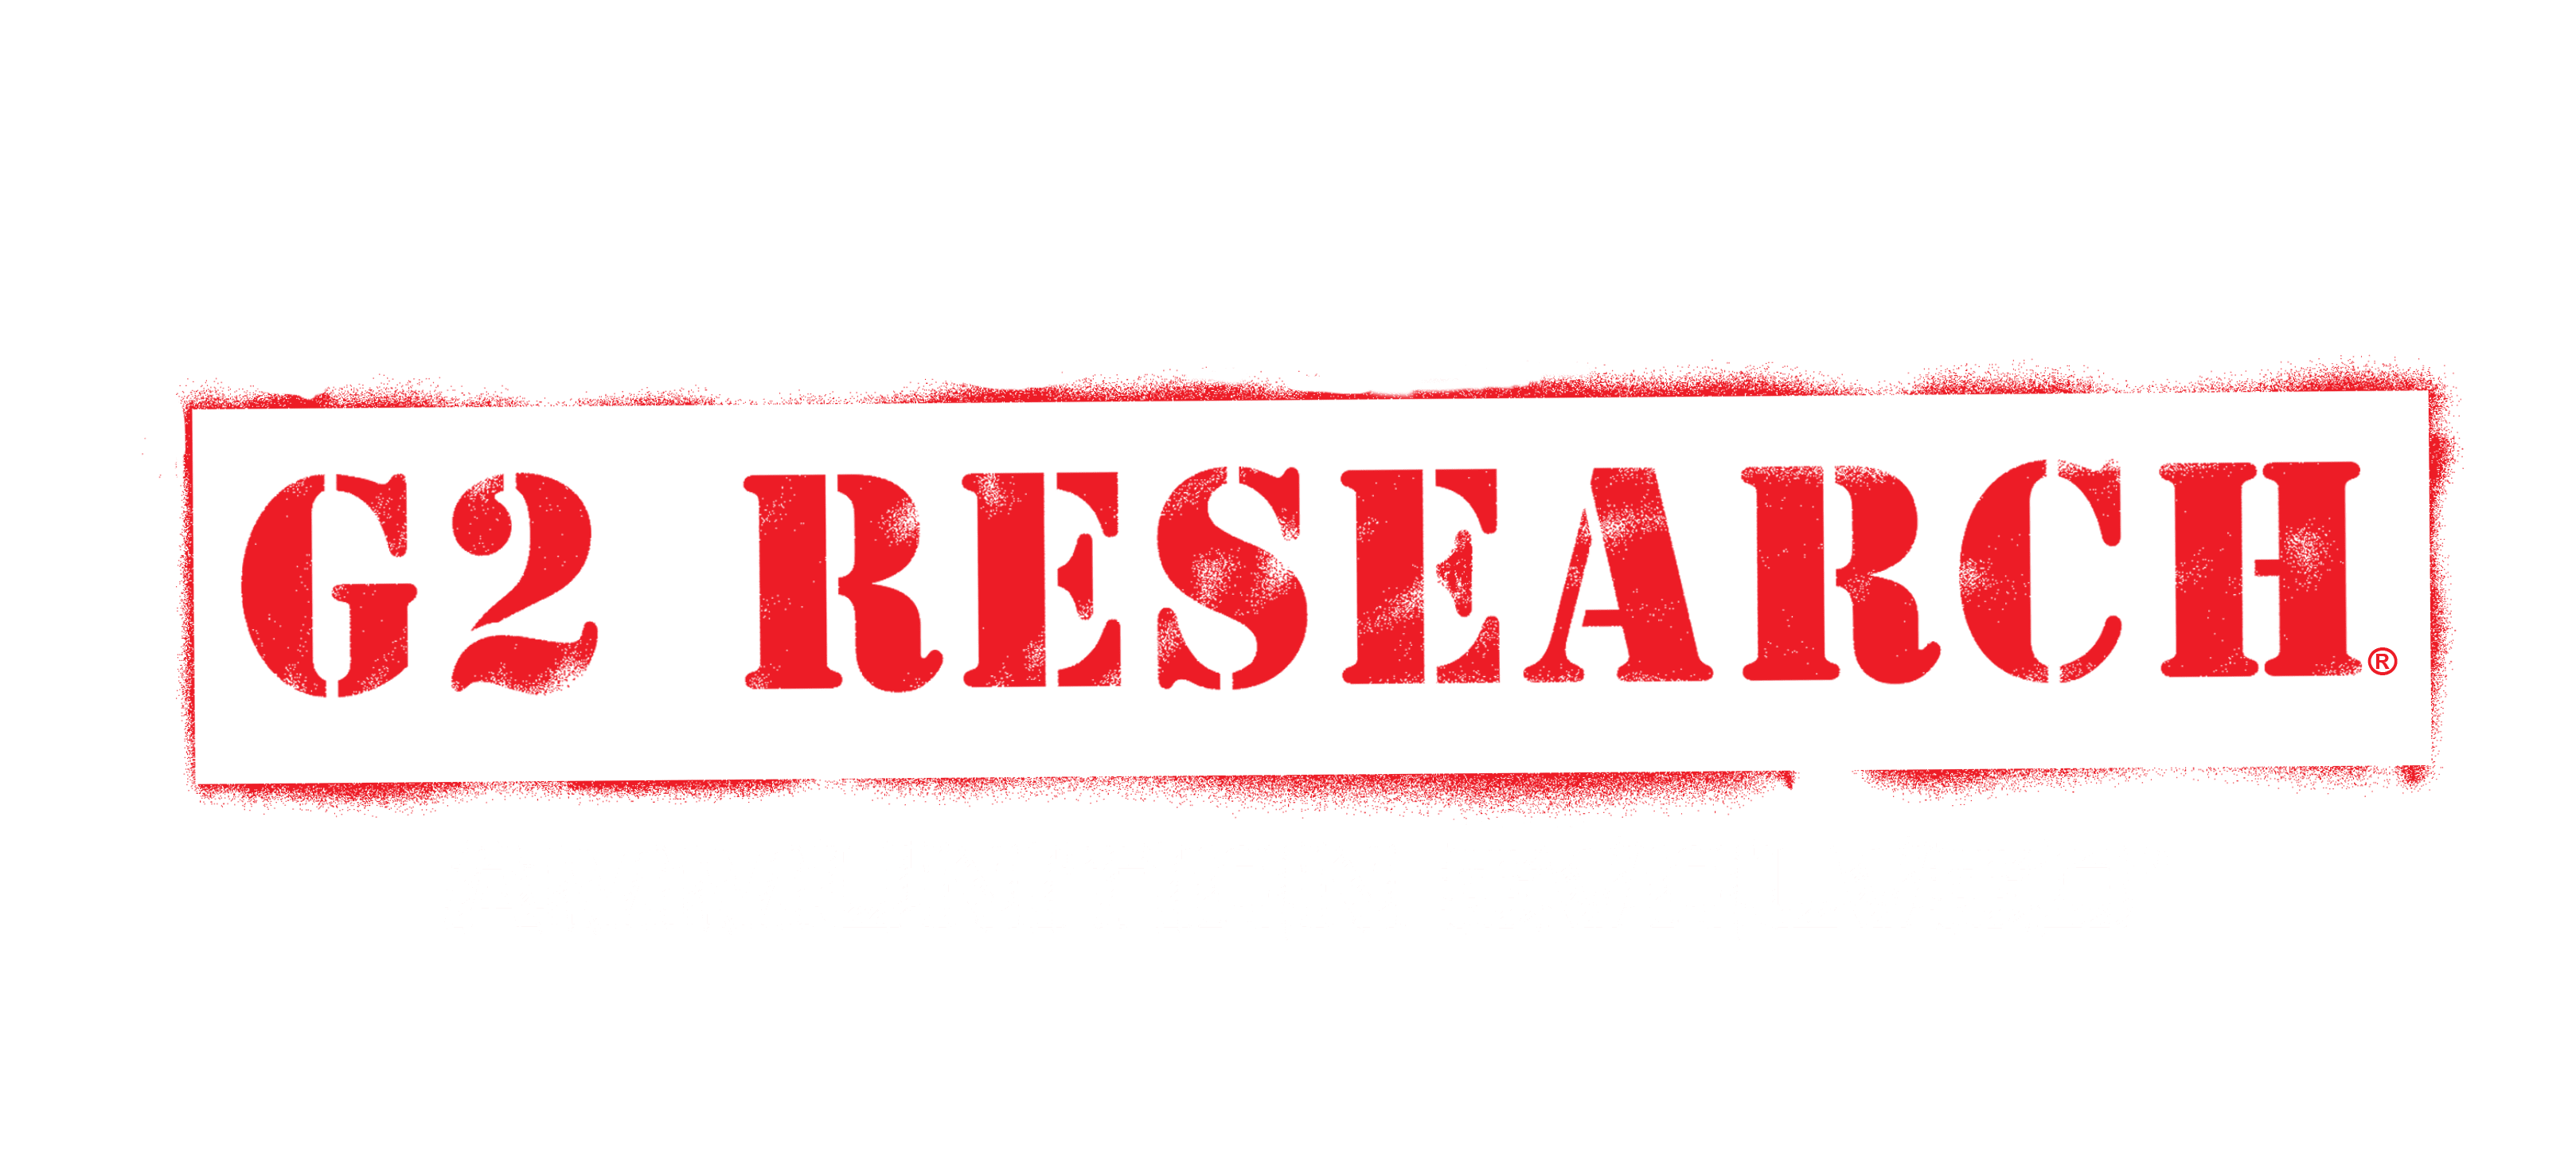 G2 Research Ammunitions